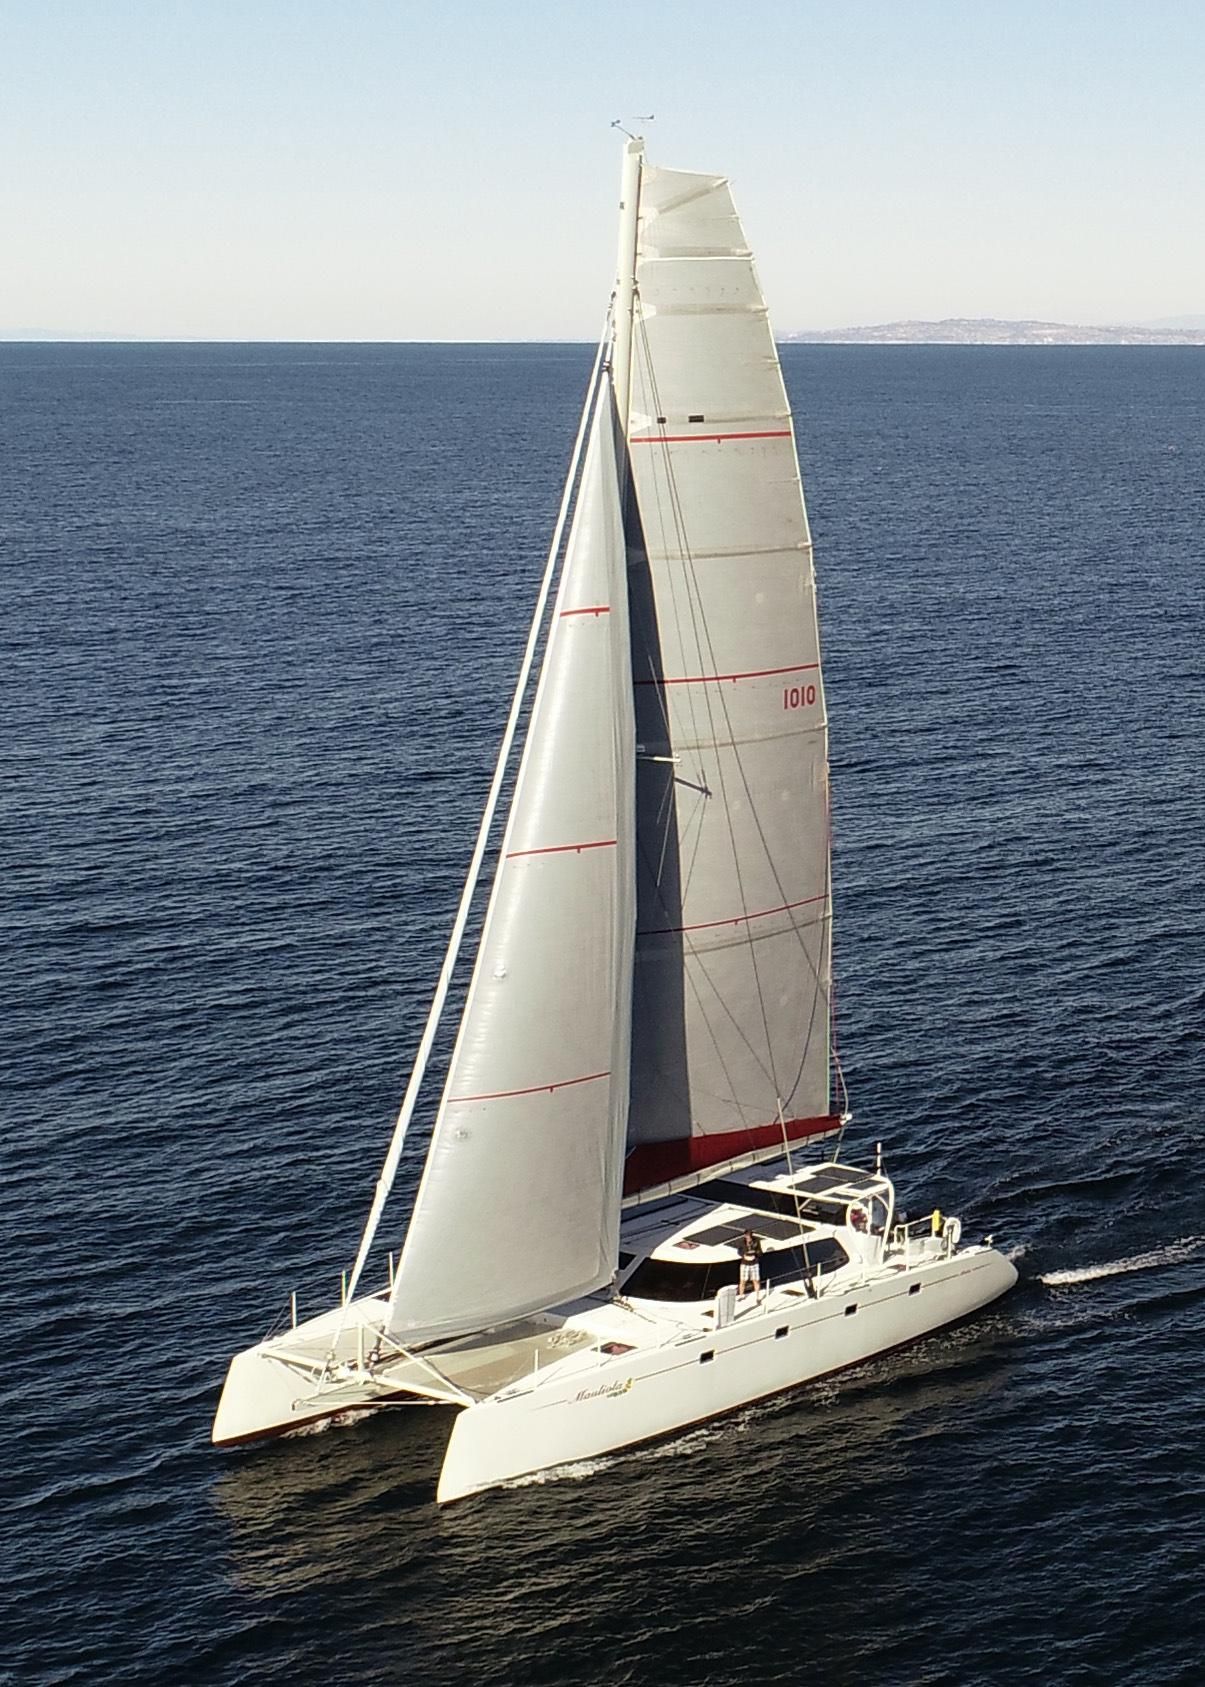 morrelli and melvin catamaran for sale